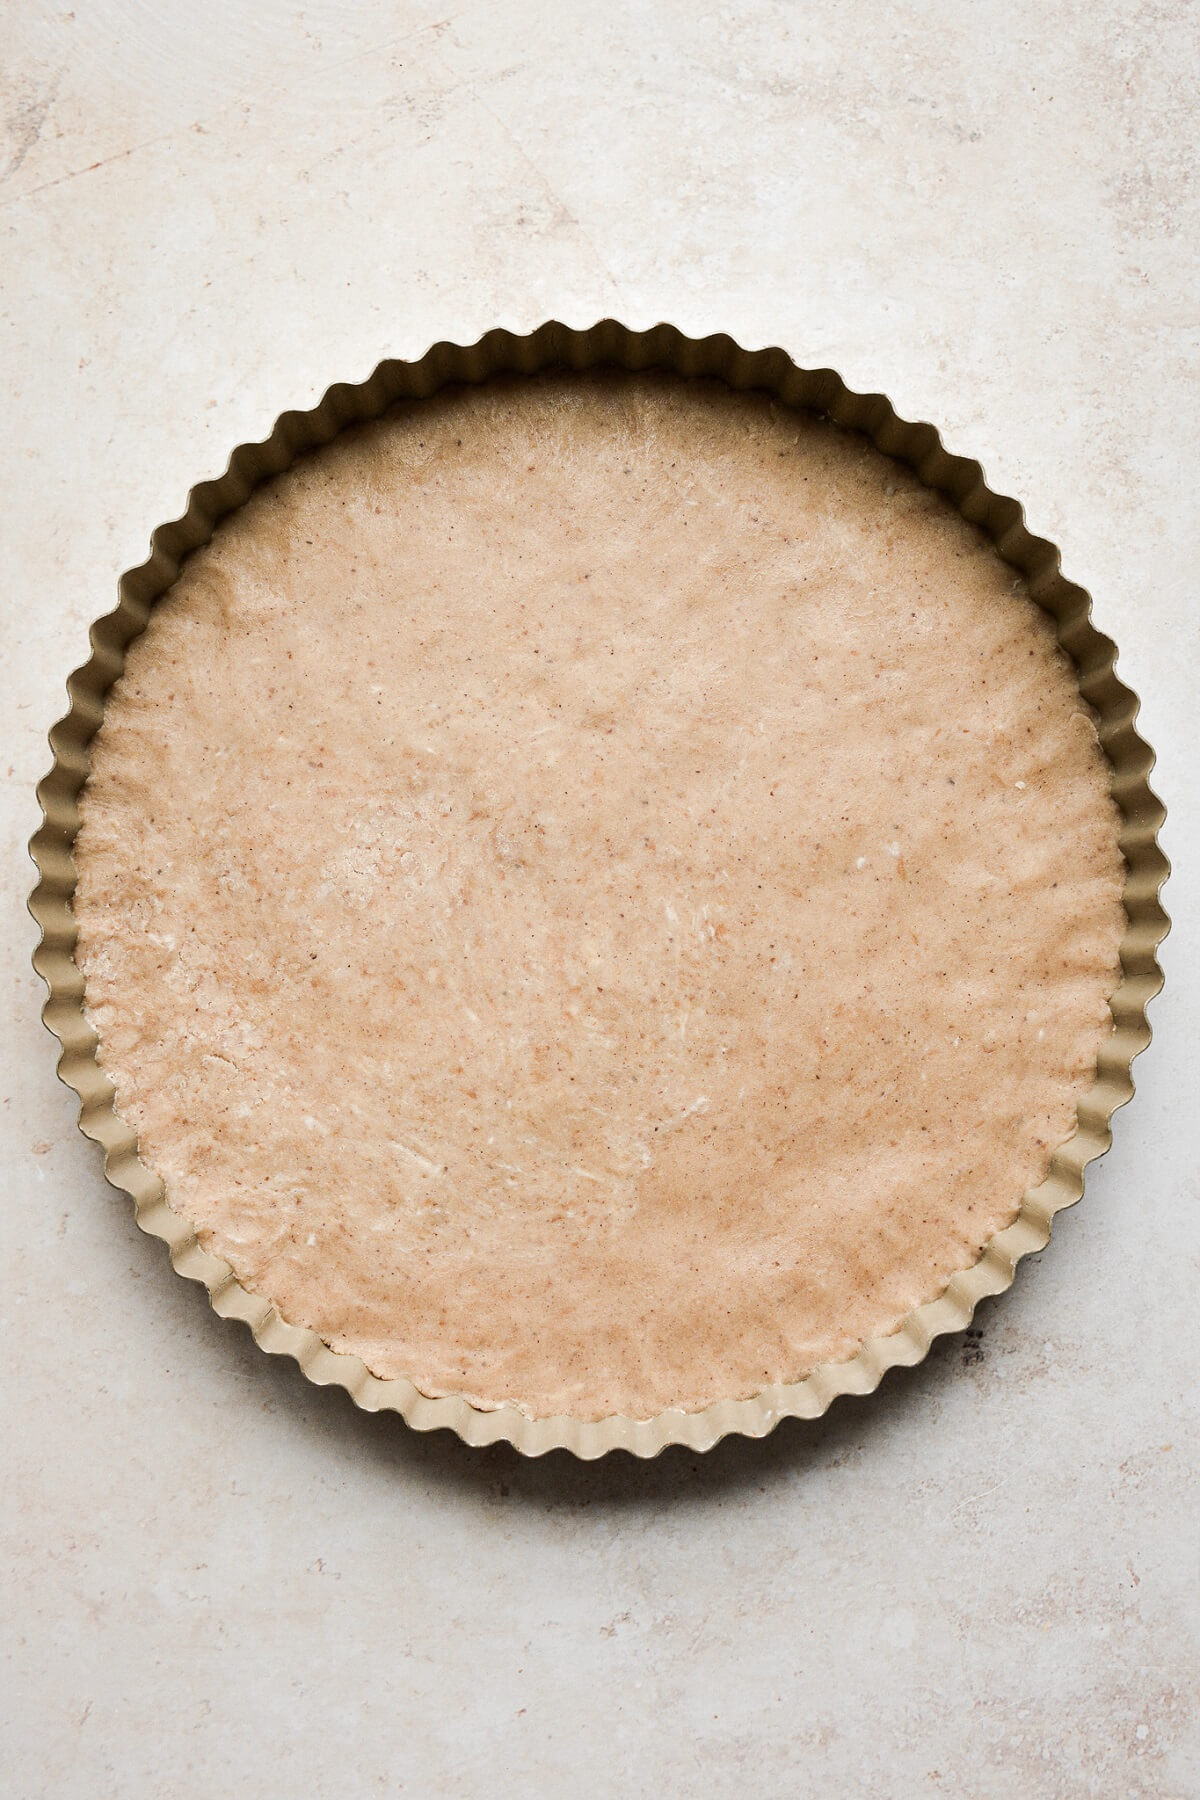 Shortbread dough pressed into a tart pan.